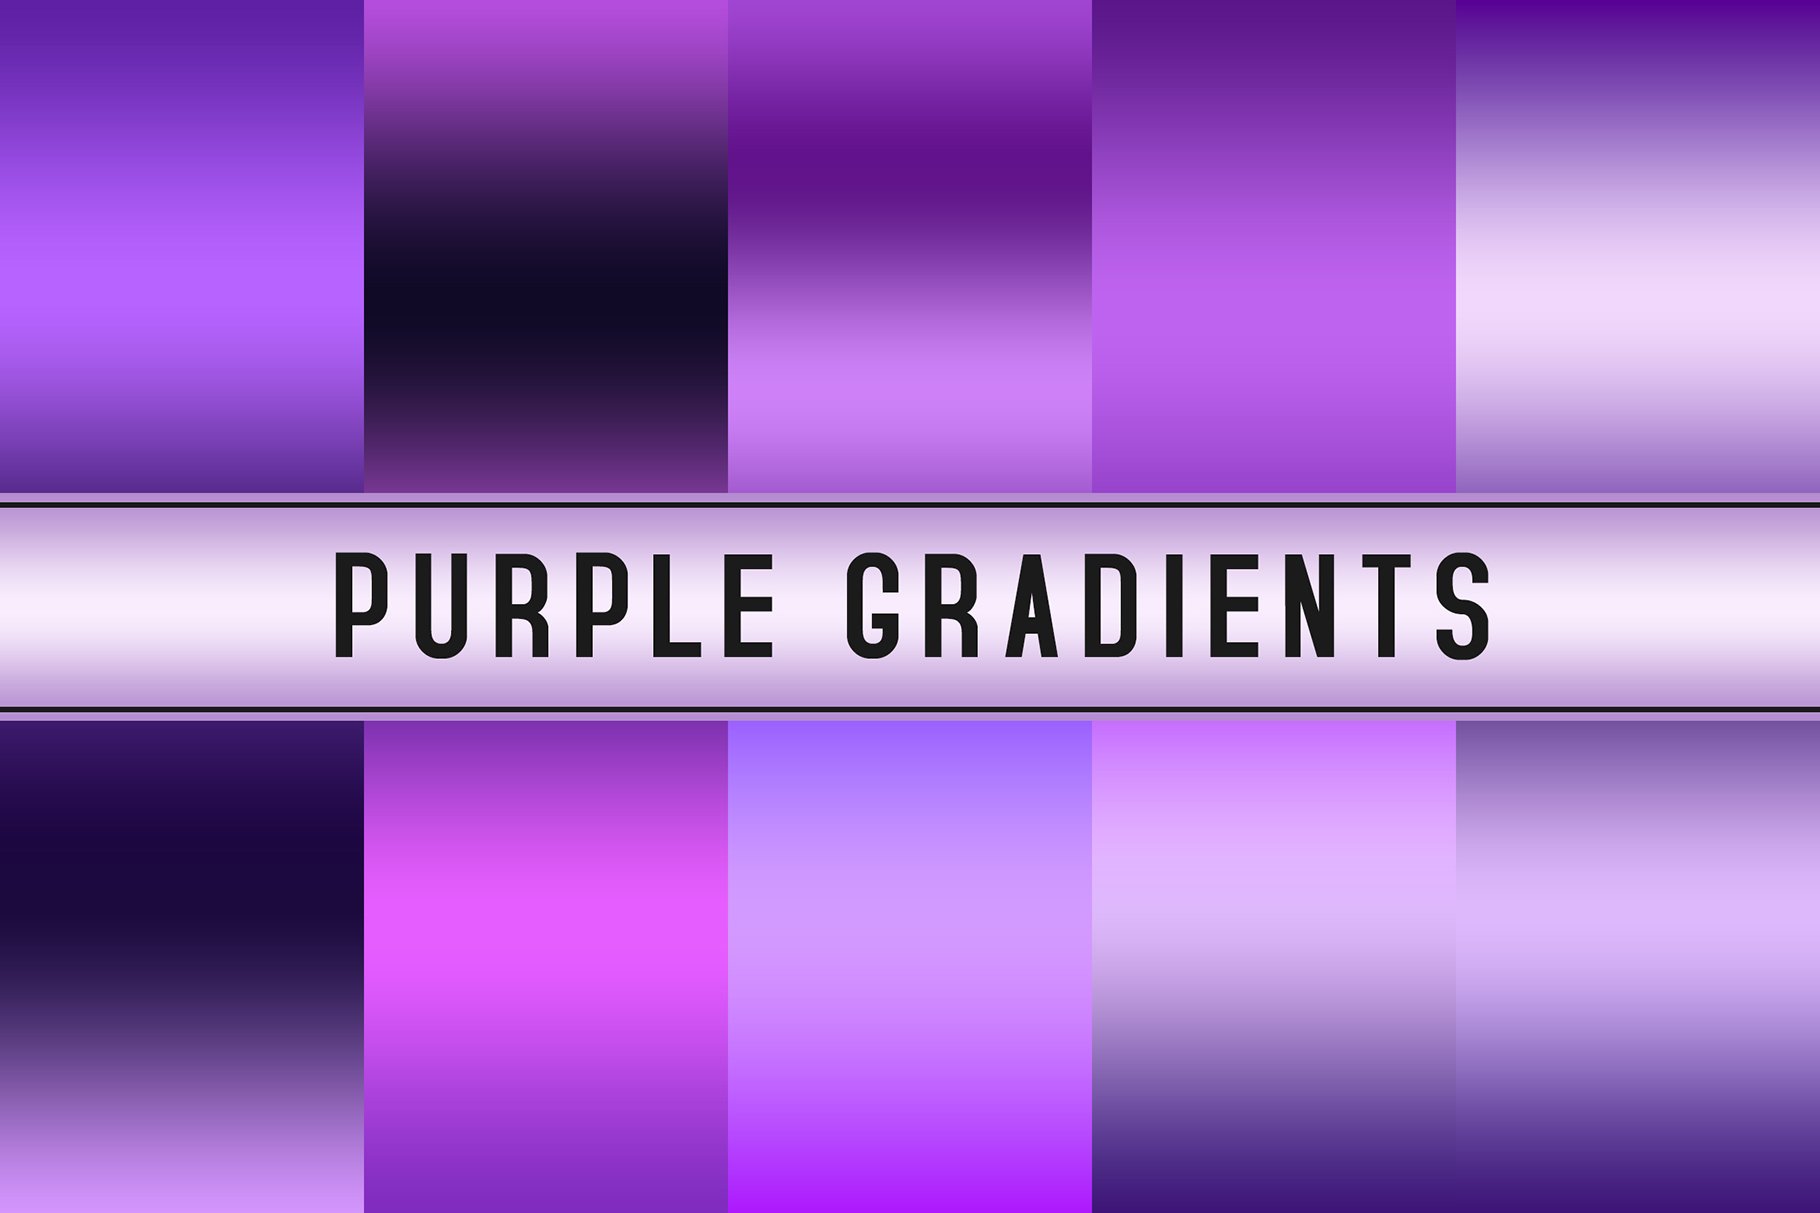 Purple Gradients cover image.